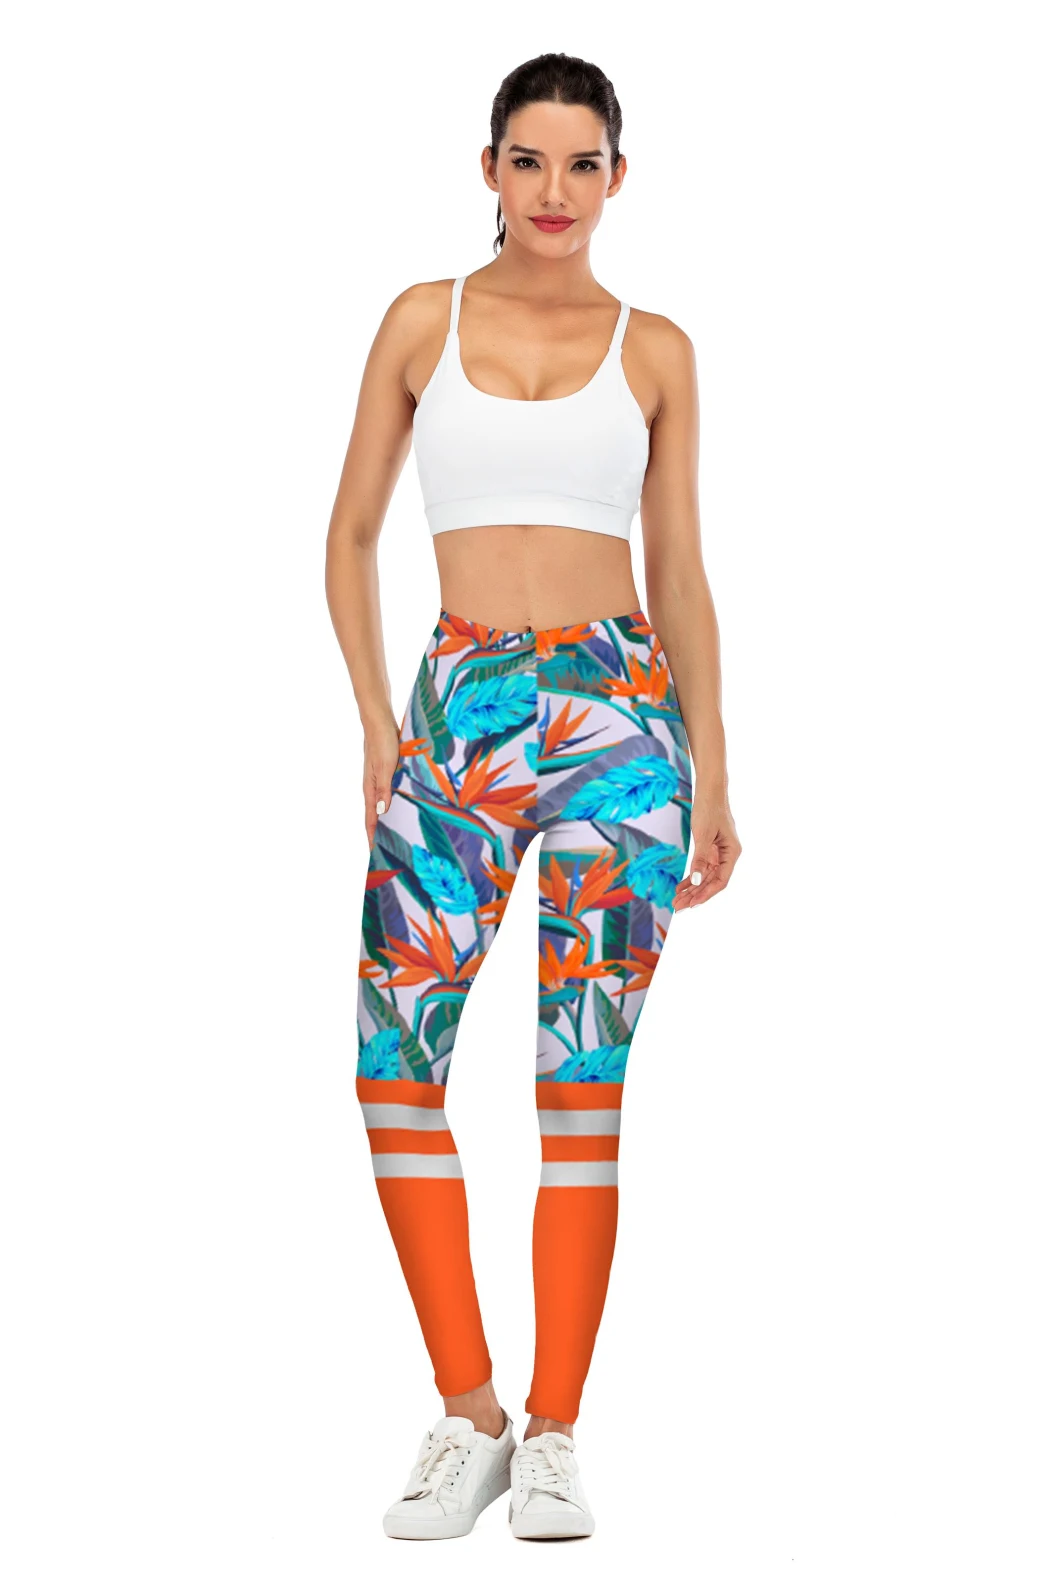 Wholesale Sports Wear Sports Leggings Custom Fashion Leggings Yoga Pants for Women Fitness